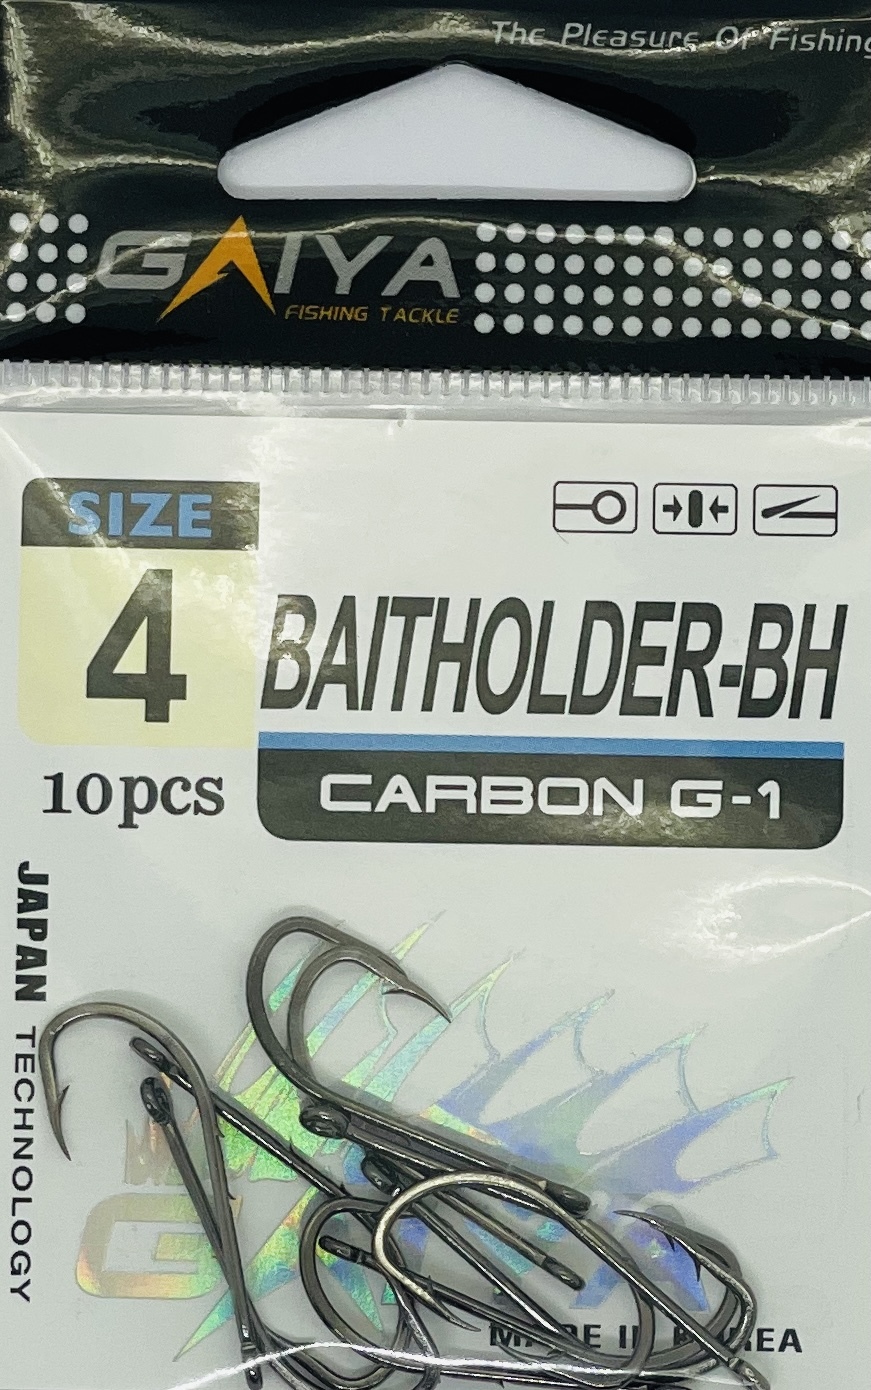 Крючки GAIYA BAITHOLDER-BH размер 4, 10 шт.